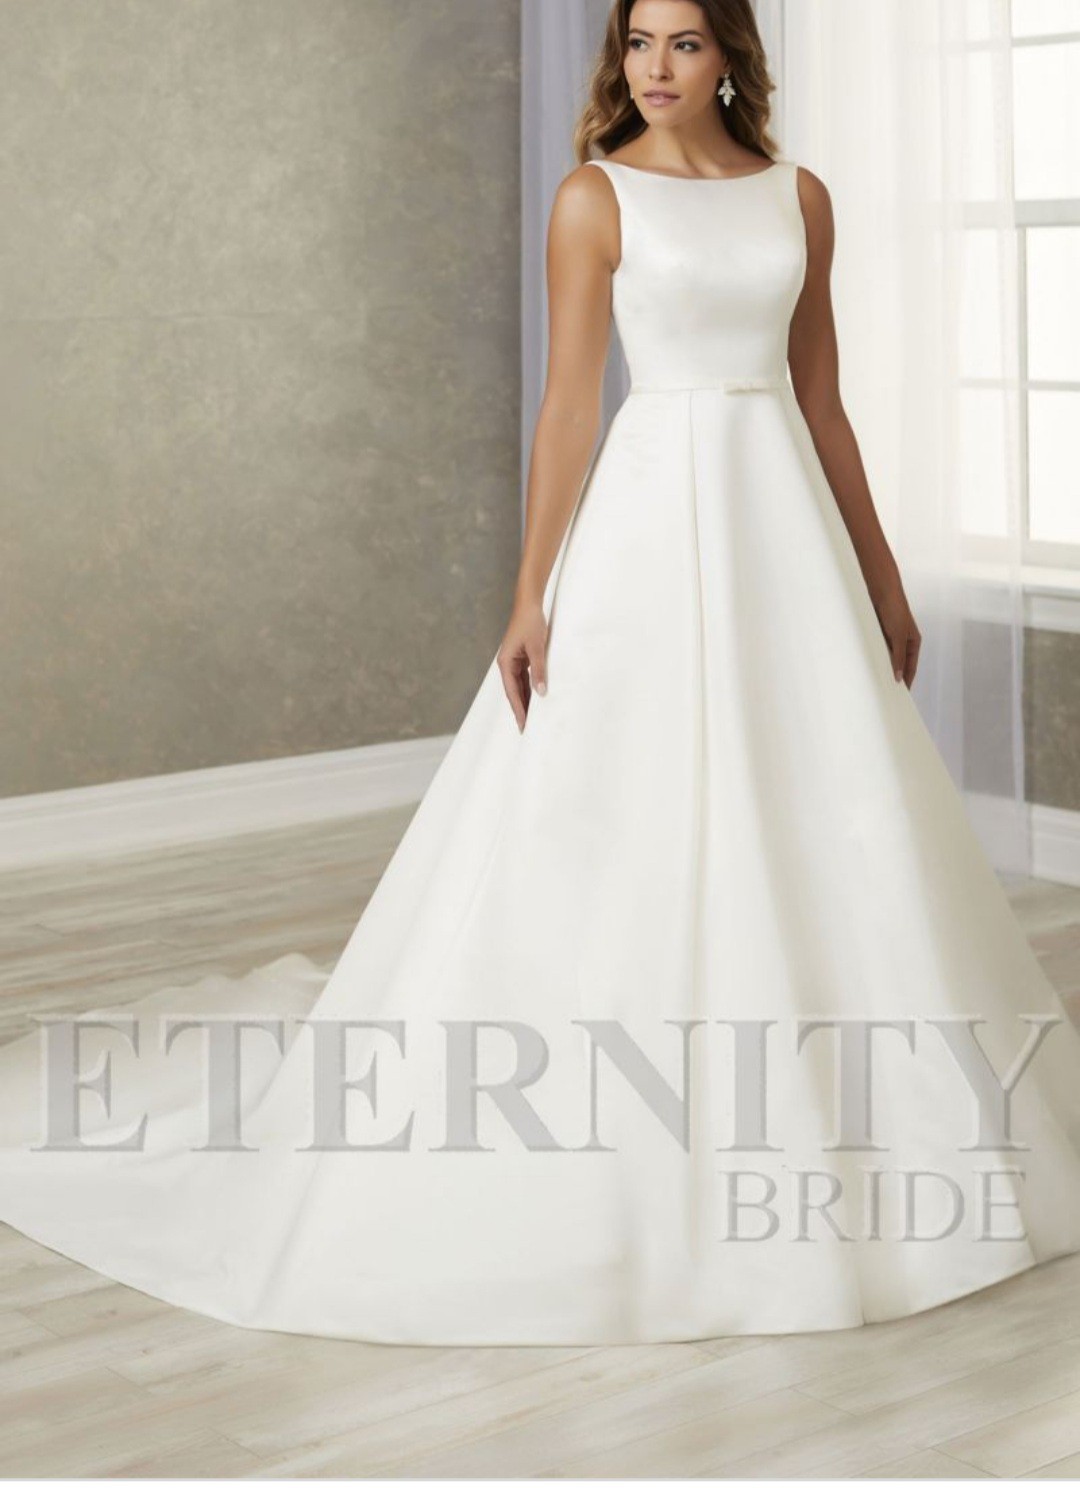 Eternity Bridal Sample Wedding Dress ...